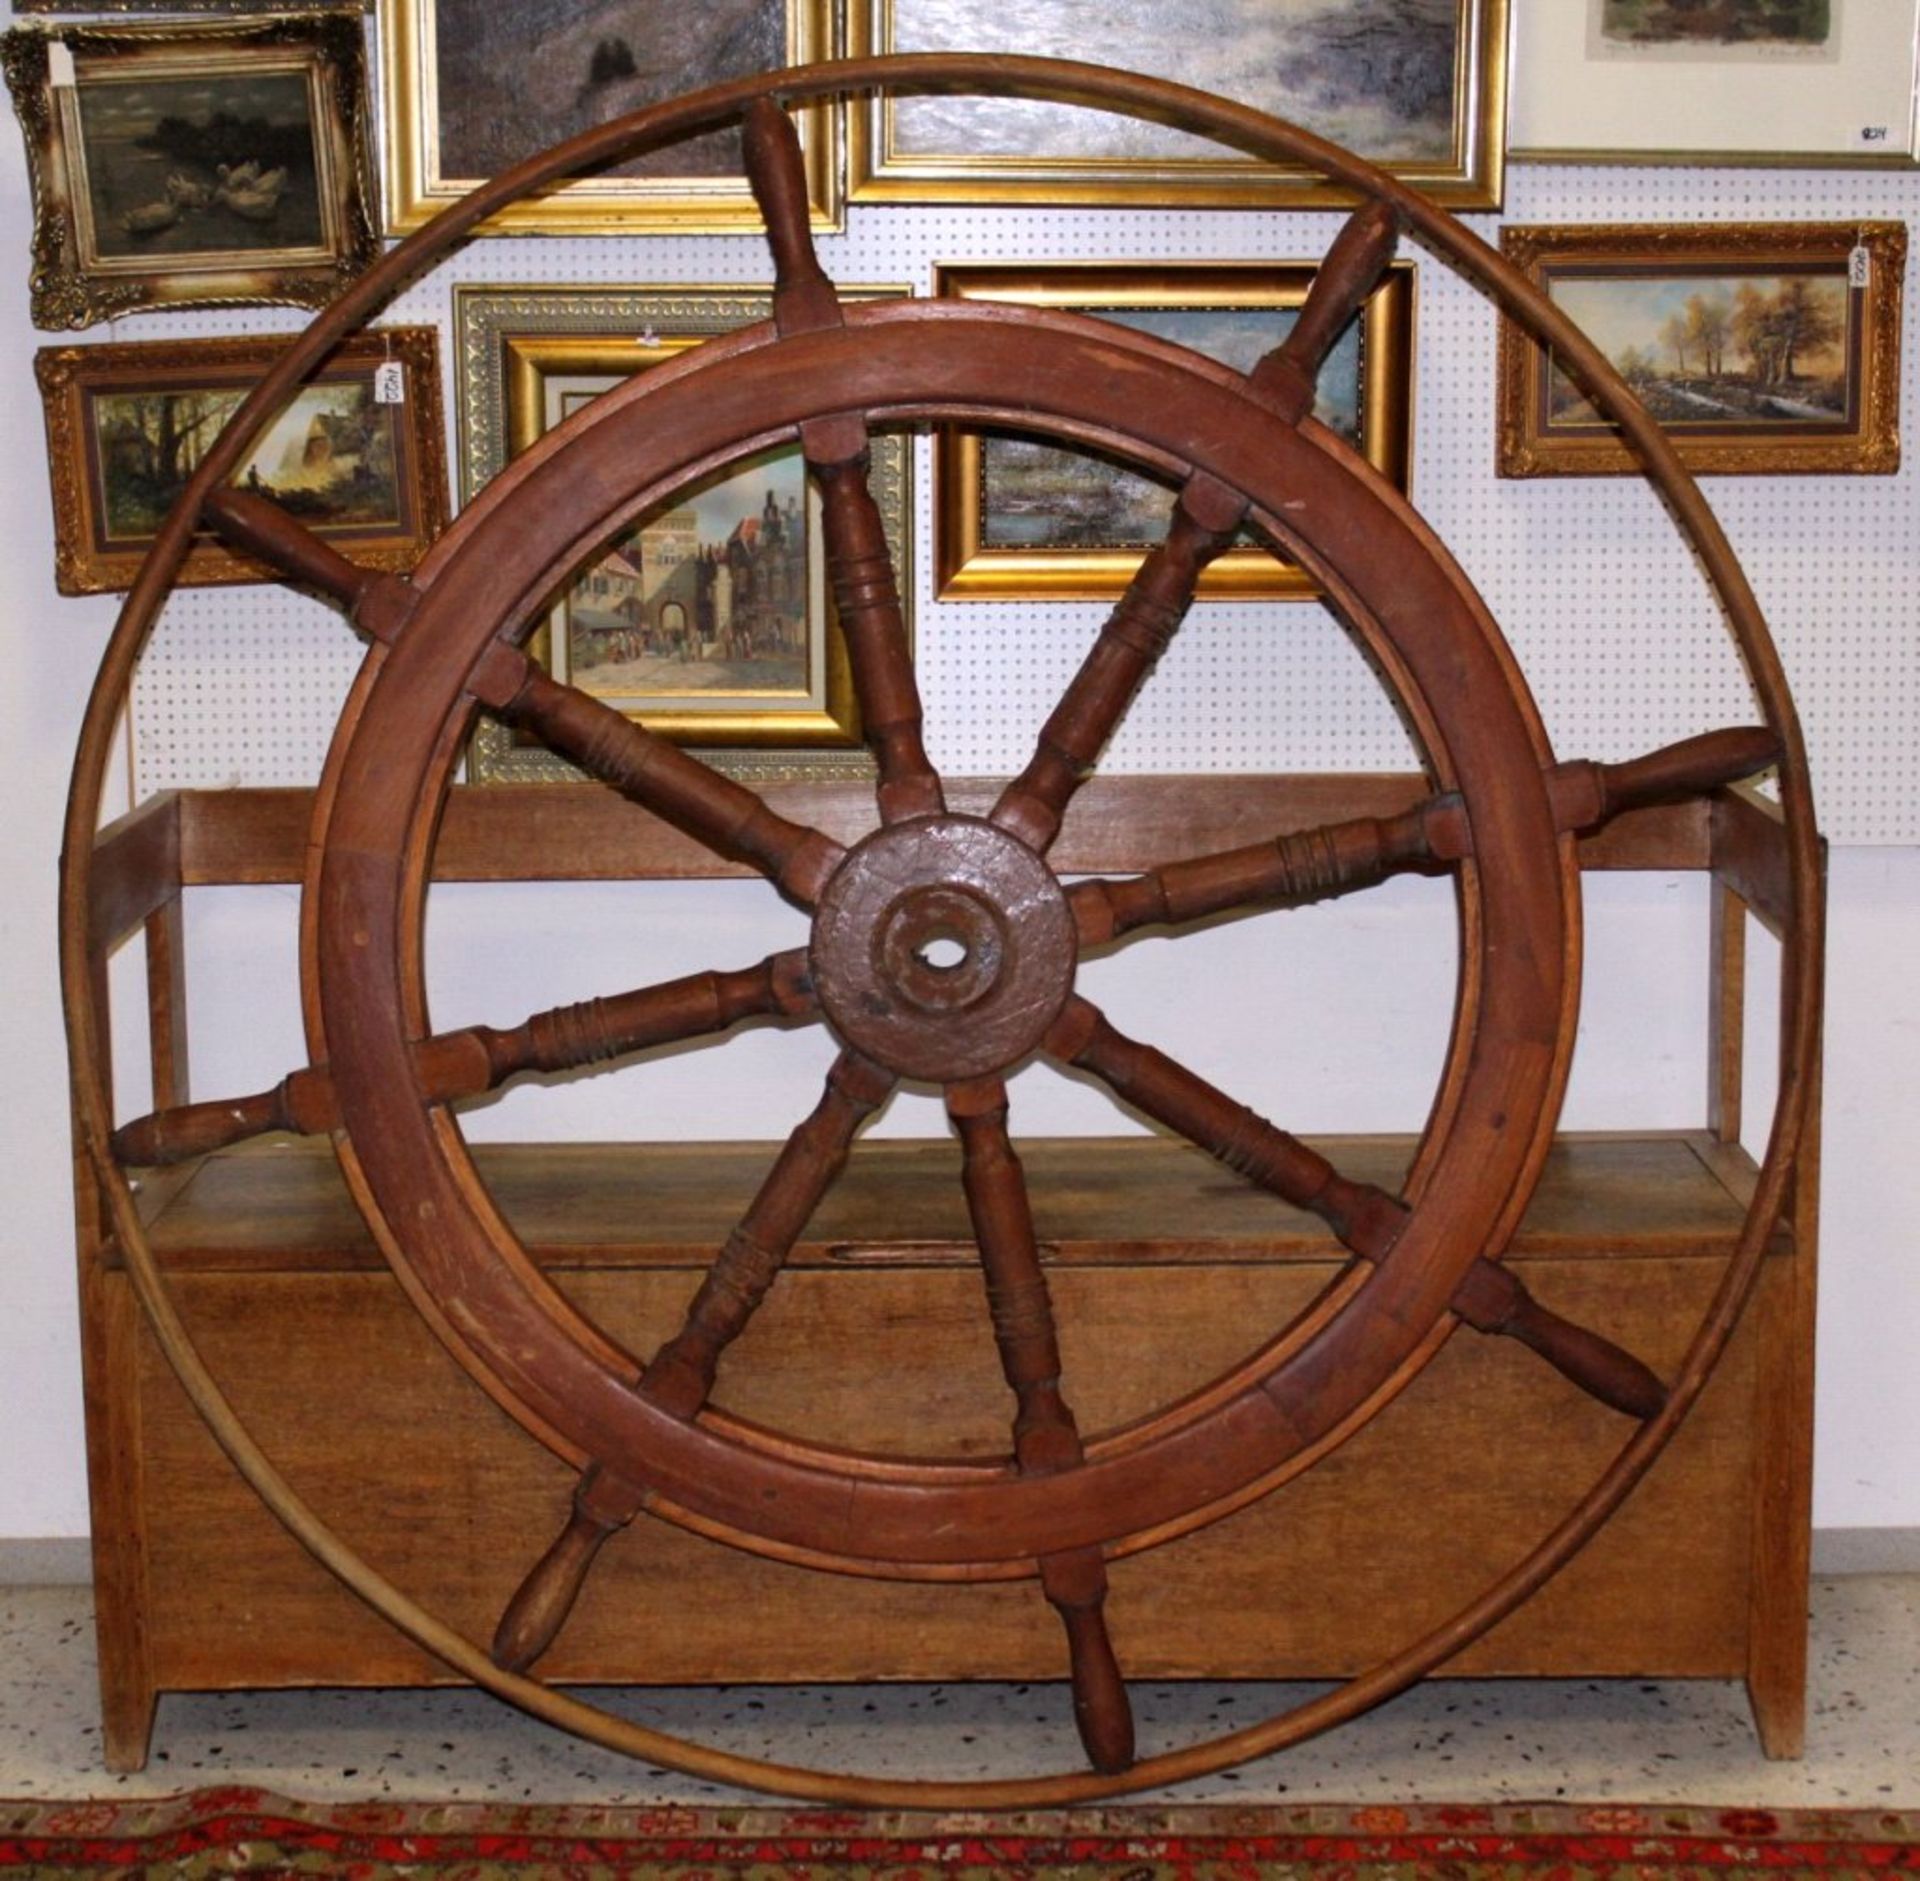 Sehr Großes Schiffssteuerrad um 1880Steuerrad im Orginalzustand, aus massivem Holz